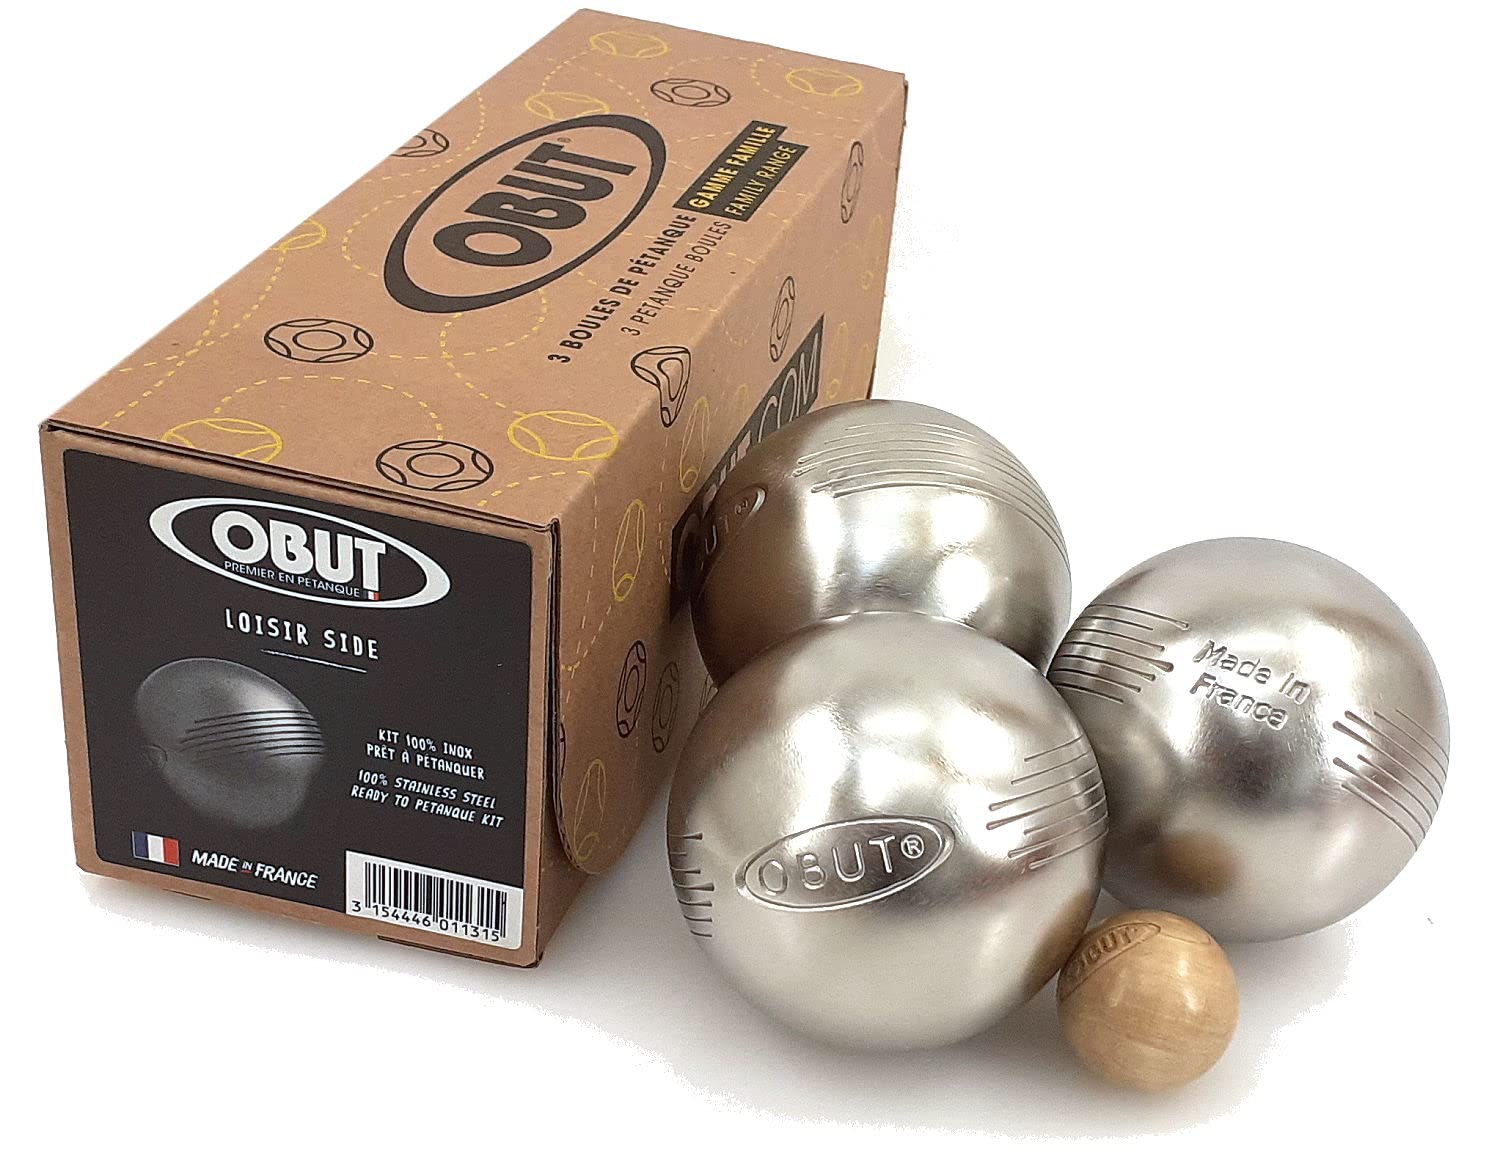 Populaire Obut Loisir inox LOOP SIDE, jeu de 3 boules h1NFDTmxu en vente